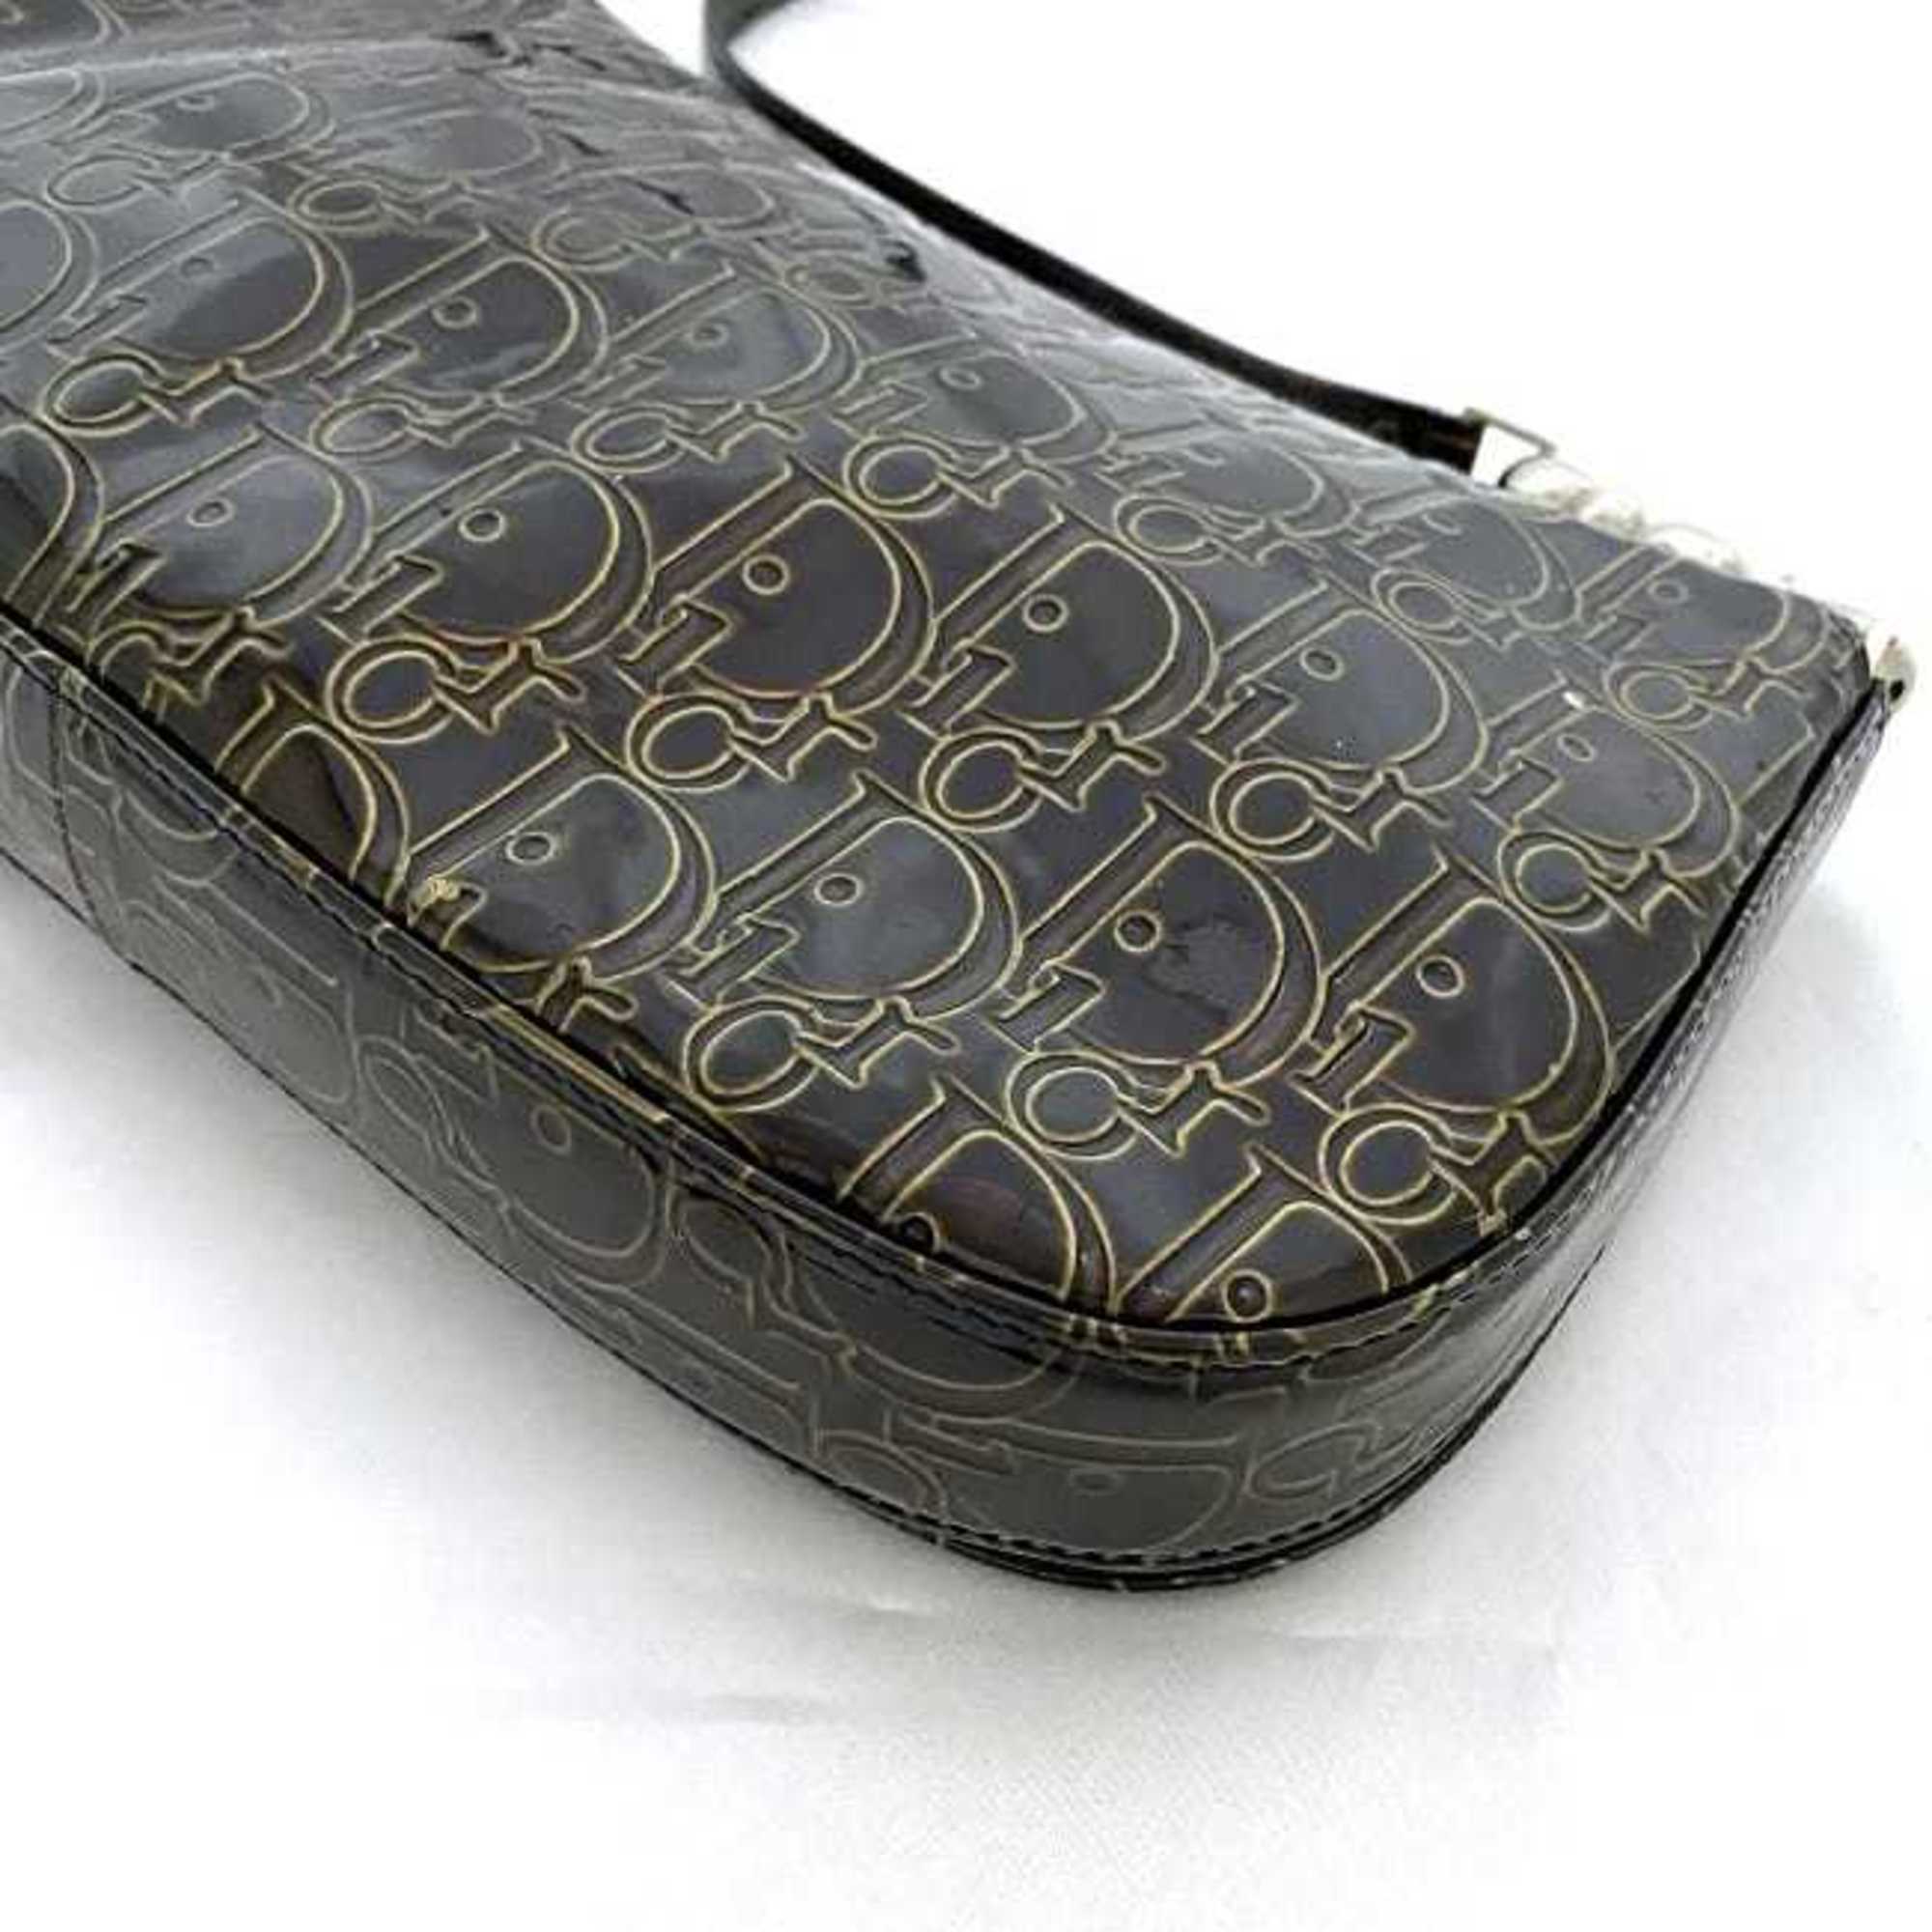 Christian Dior Bag Dark Brown Trotter f-20397 Handbag Patent Leather Flap